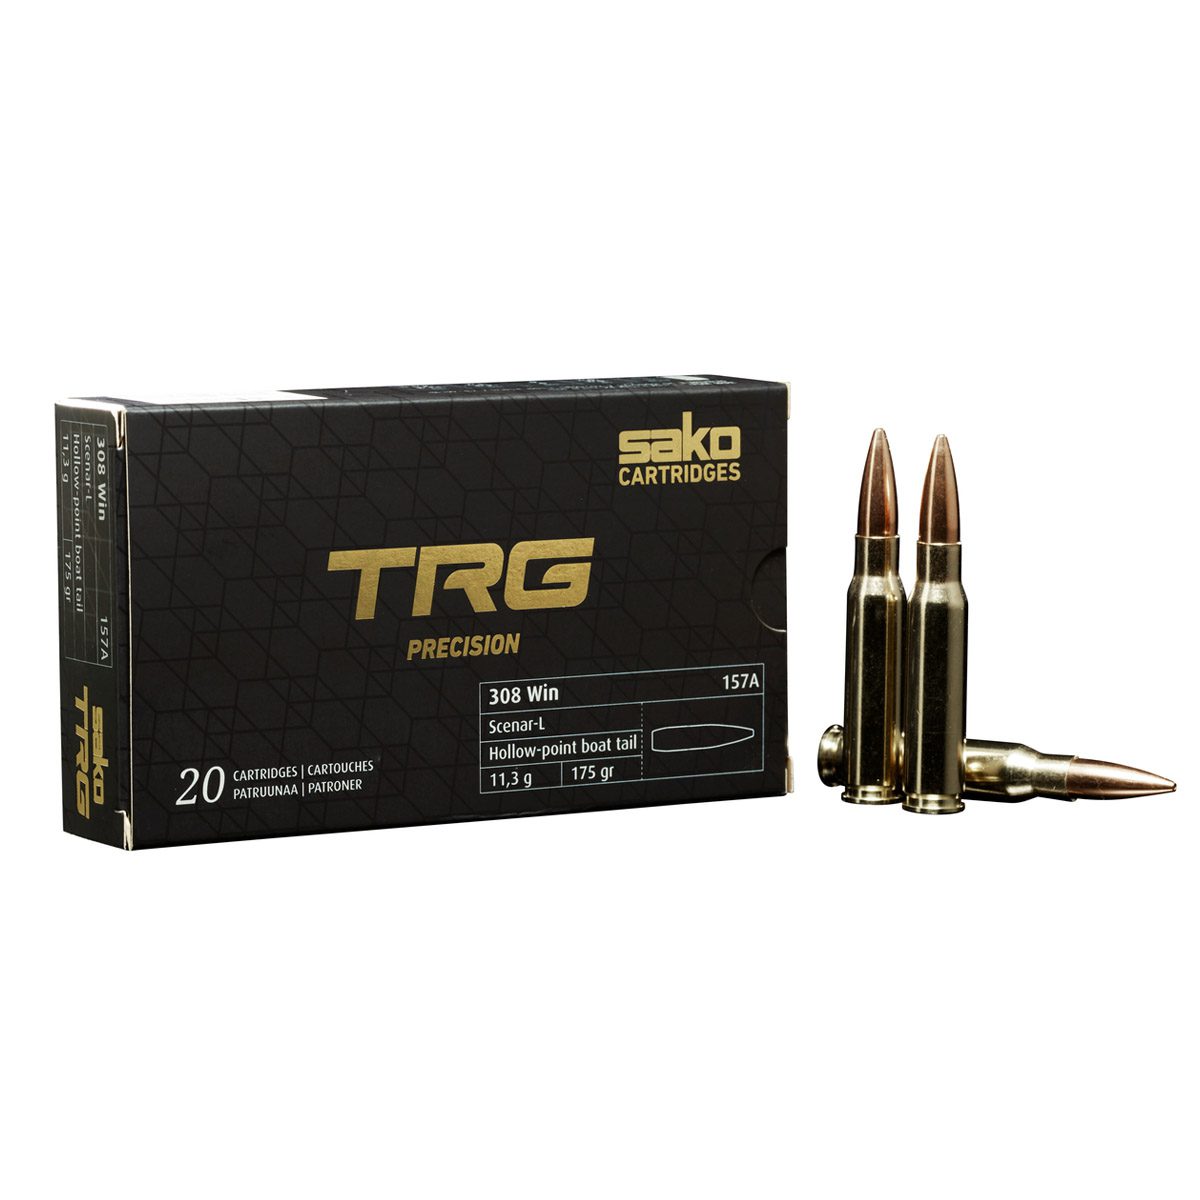 Sako Ammunition 308 Win. TRG Precision 175 Gr. – 20 Rounds